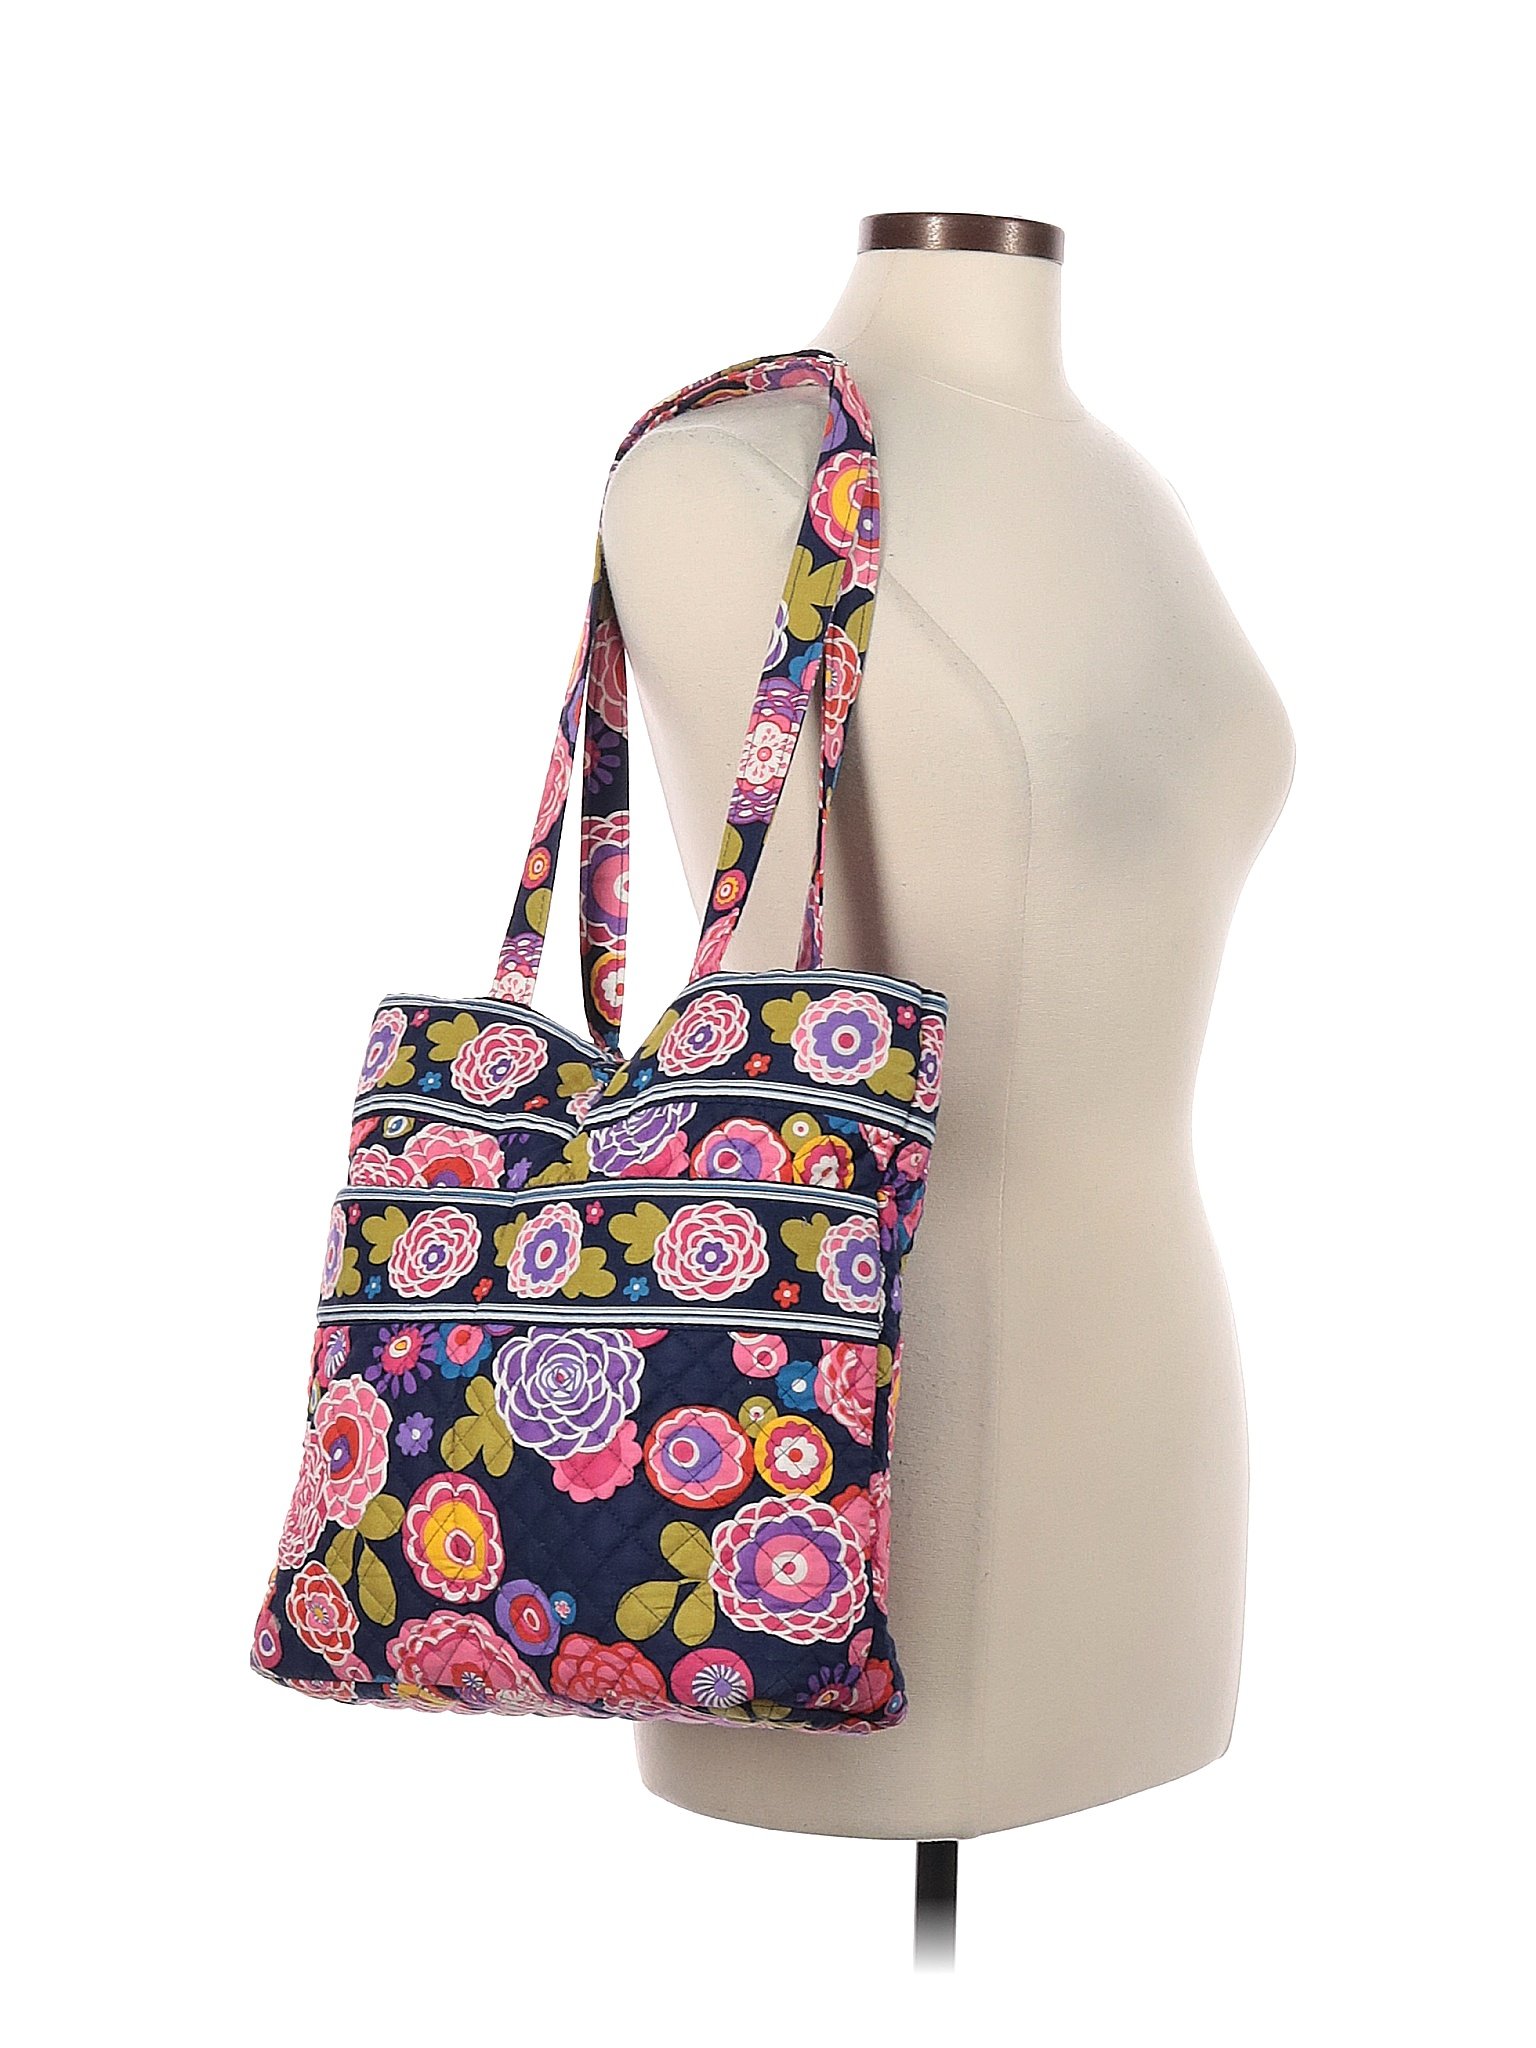 Stephanie Dawn Handbags On Sale Up To 90% Off Retail | thredUP